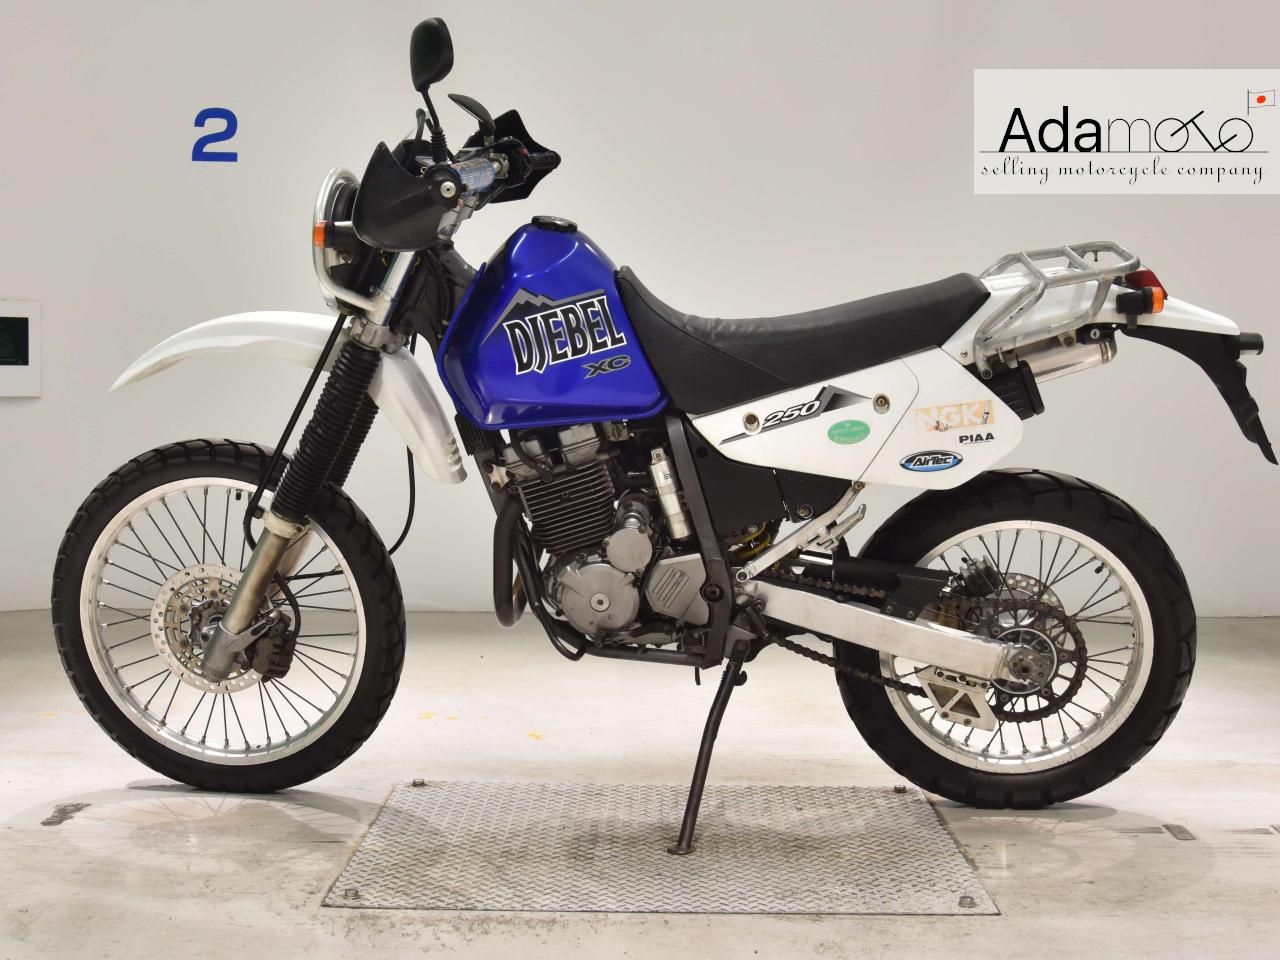 Suzuki DJEBEL250XC - Adamoto - Motorcycles from Japan